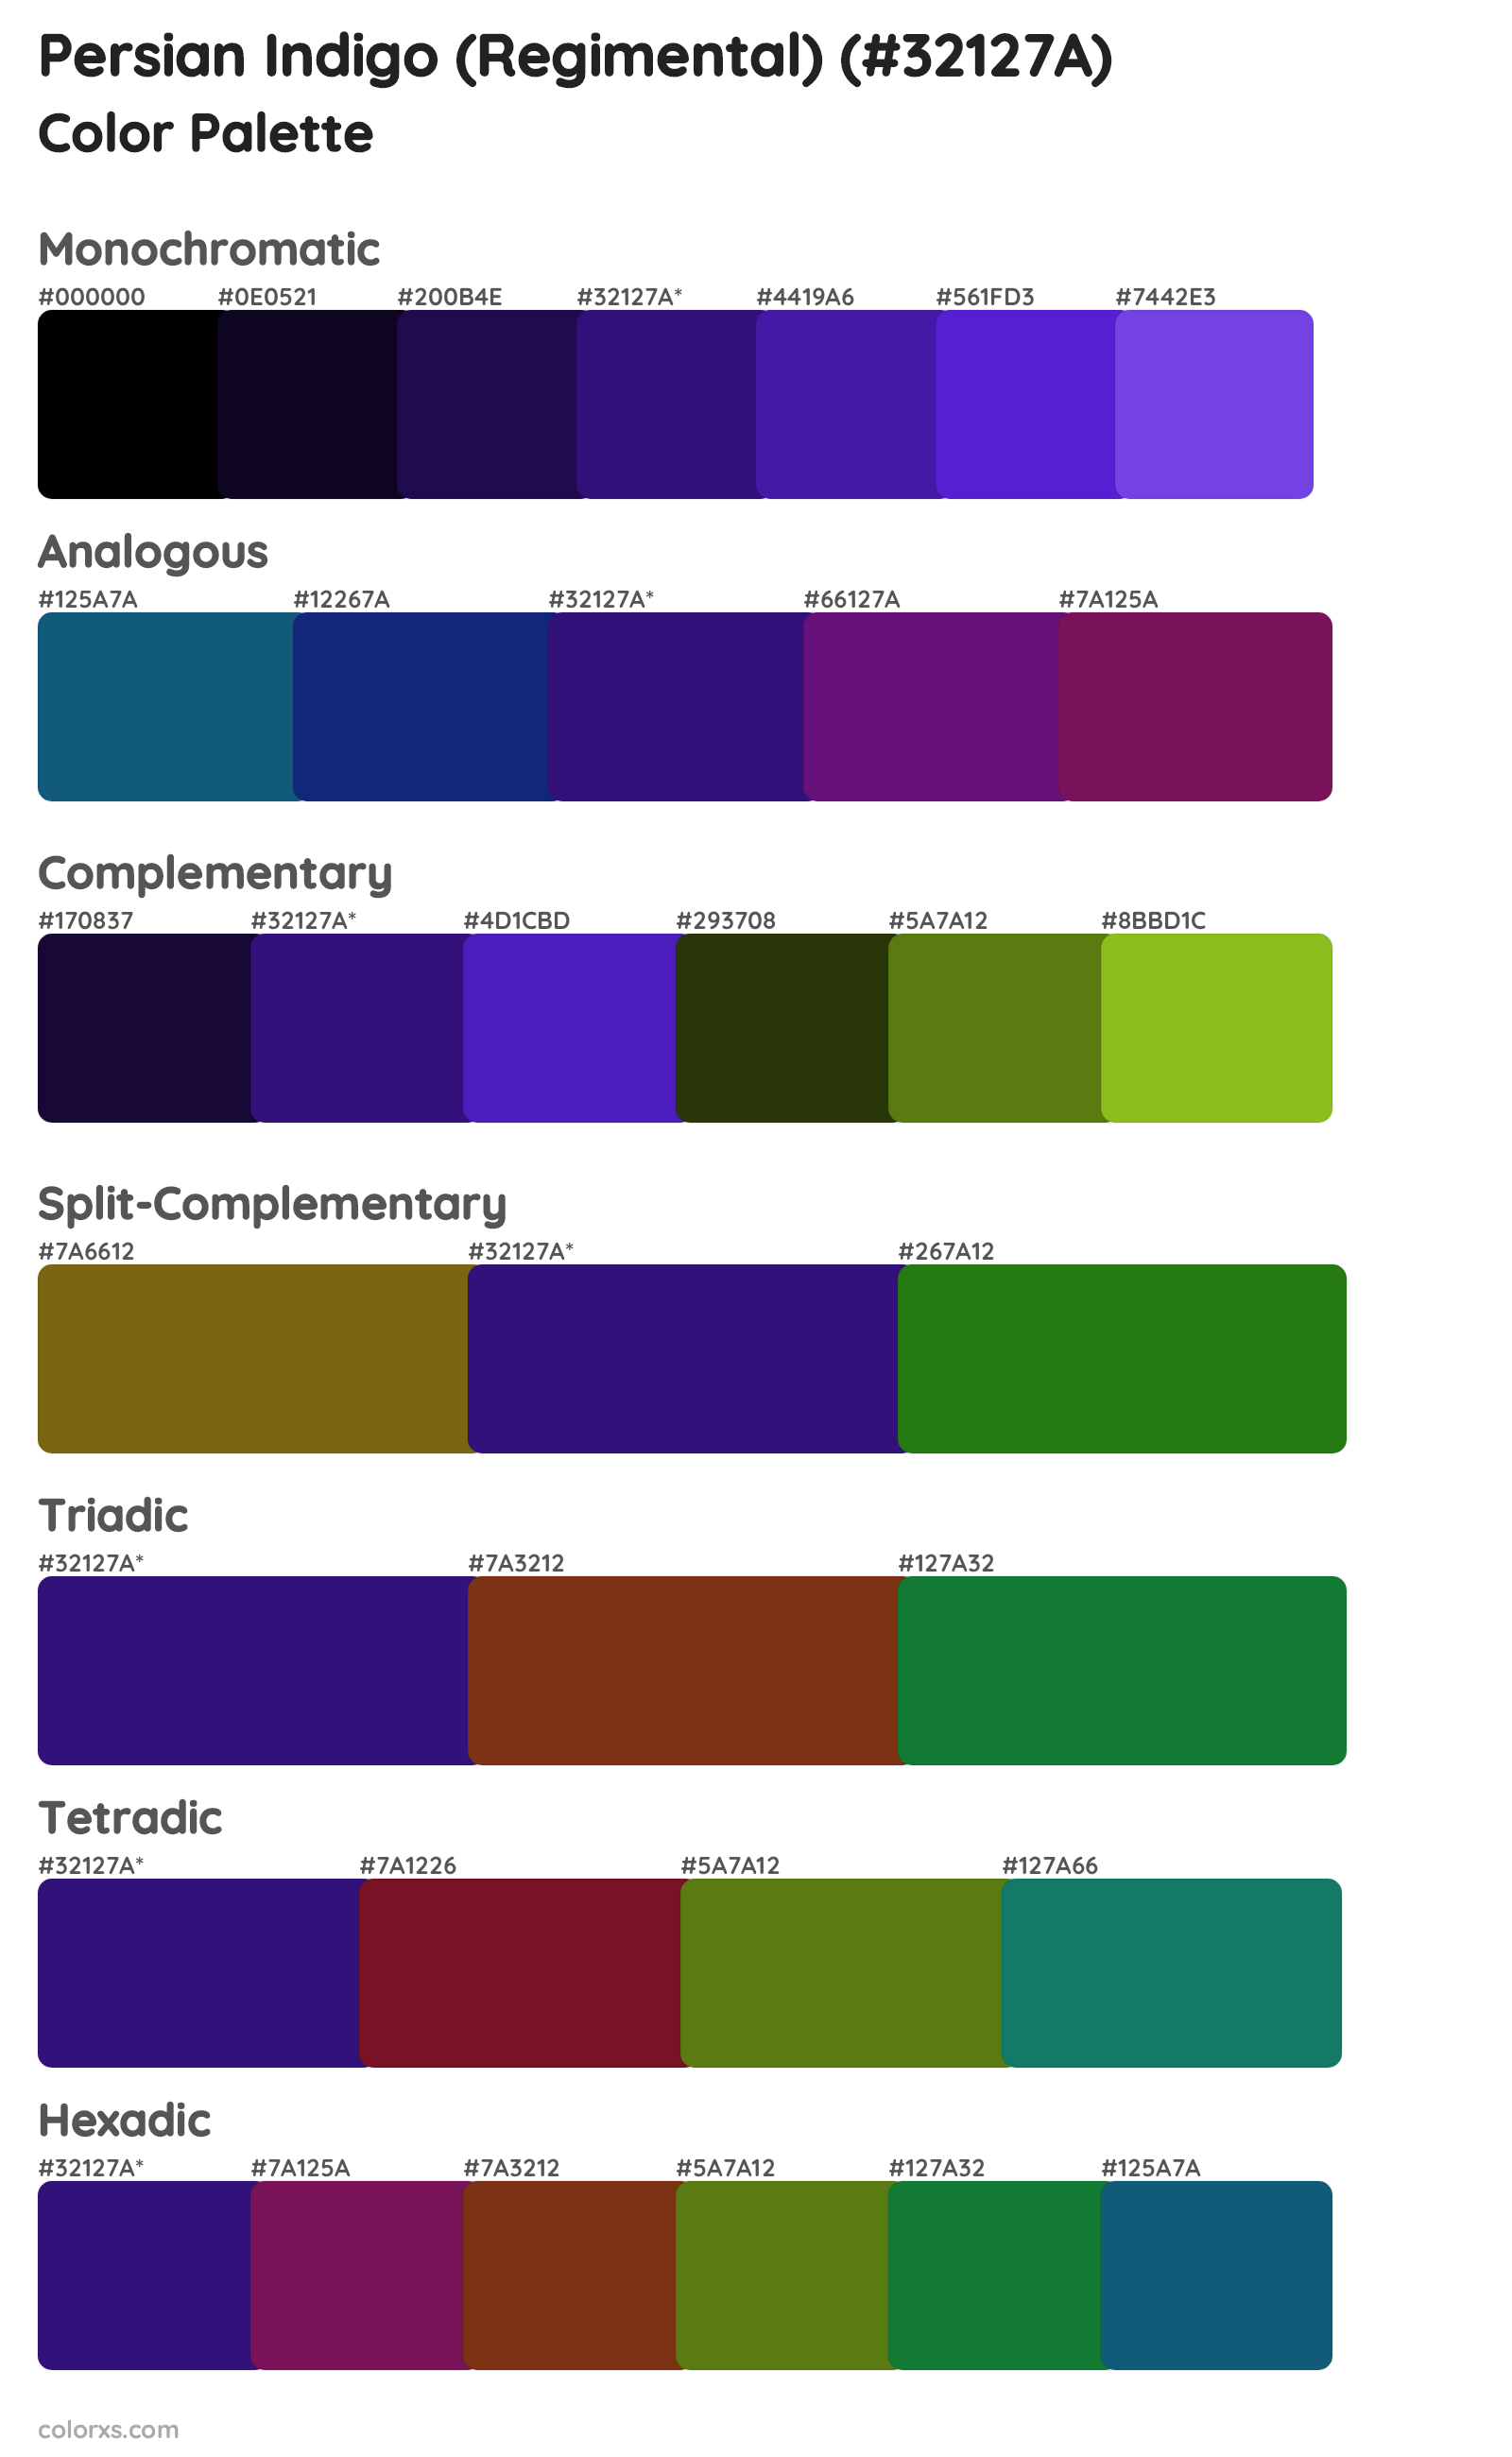 Persian Indigo (Regimental) Color Scheme Palettes